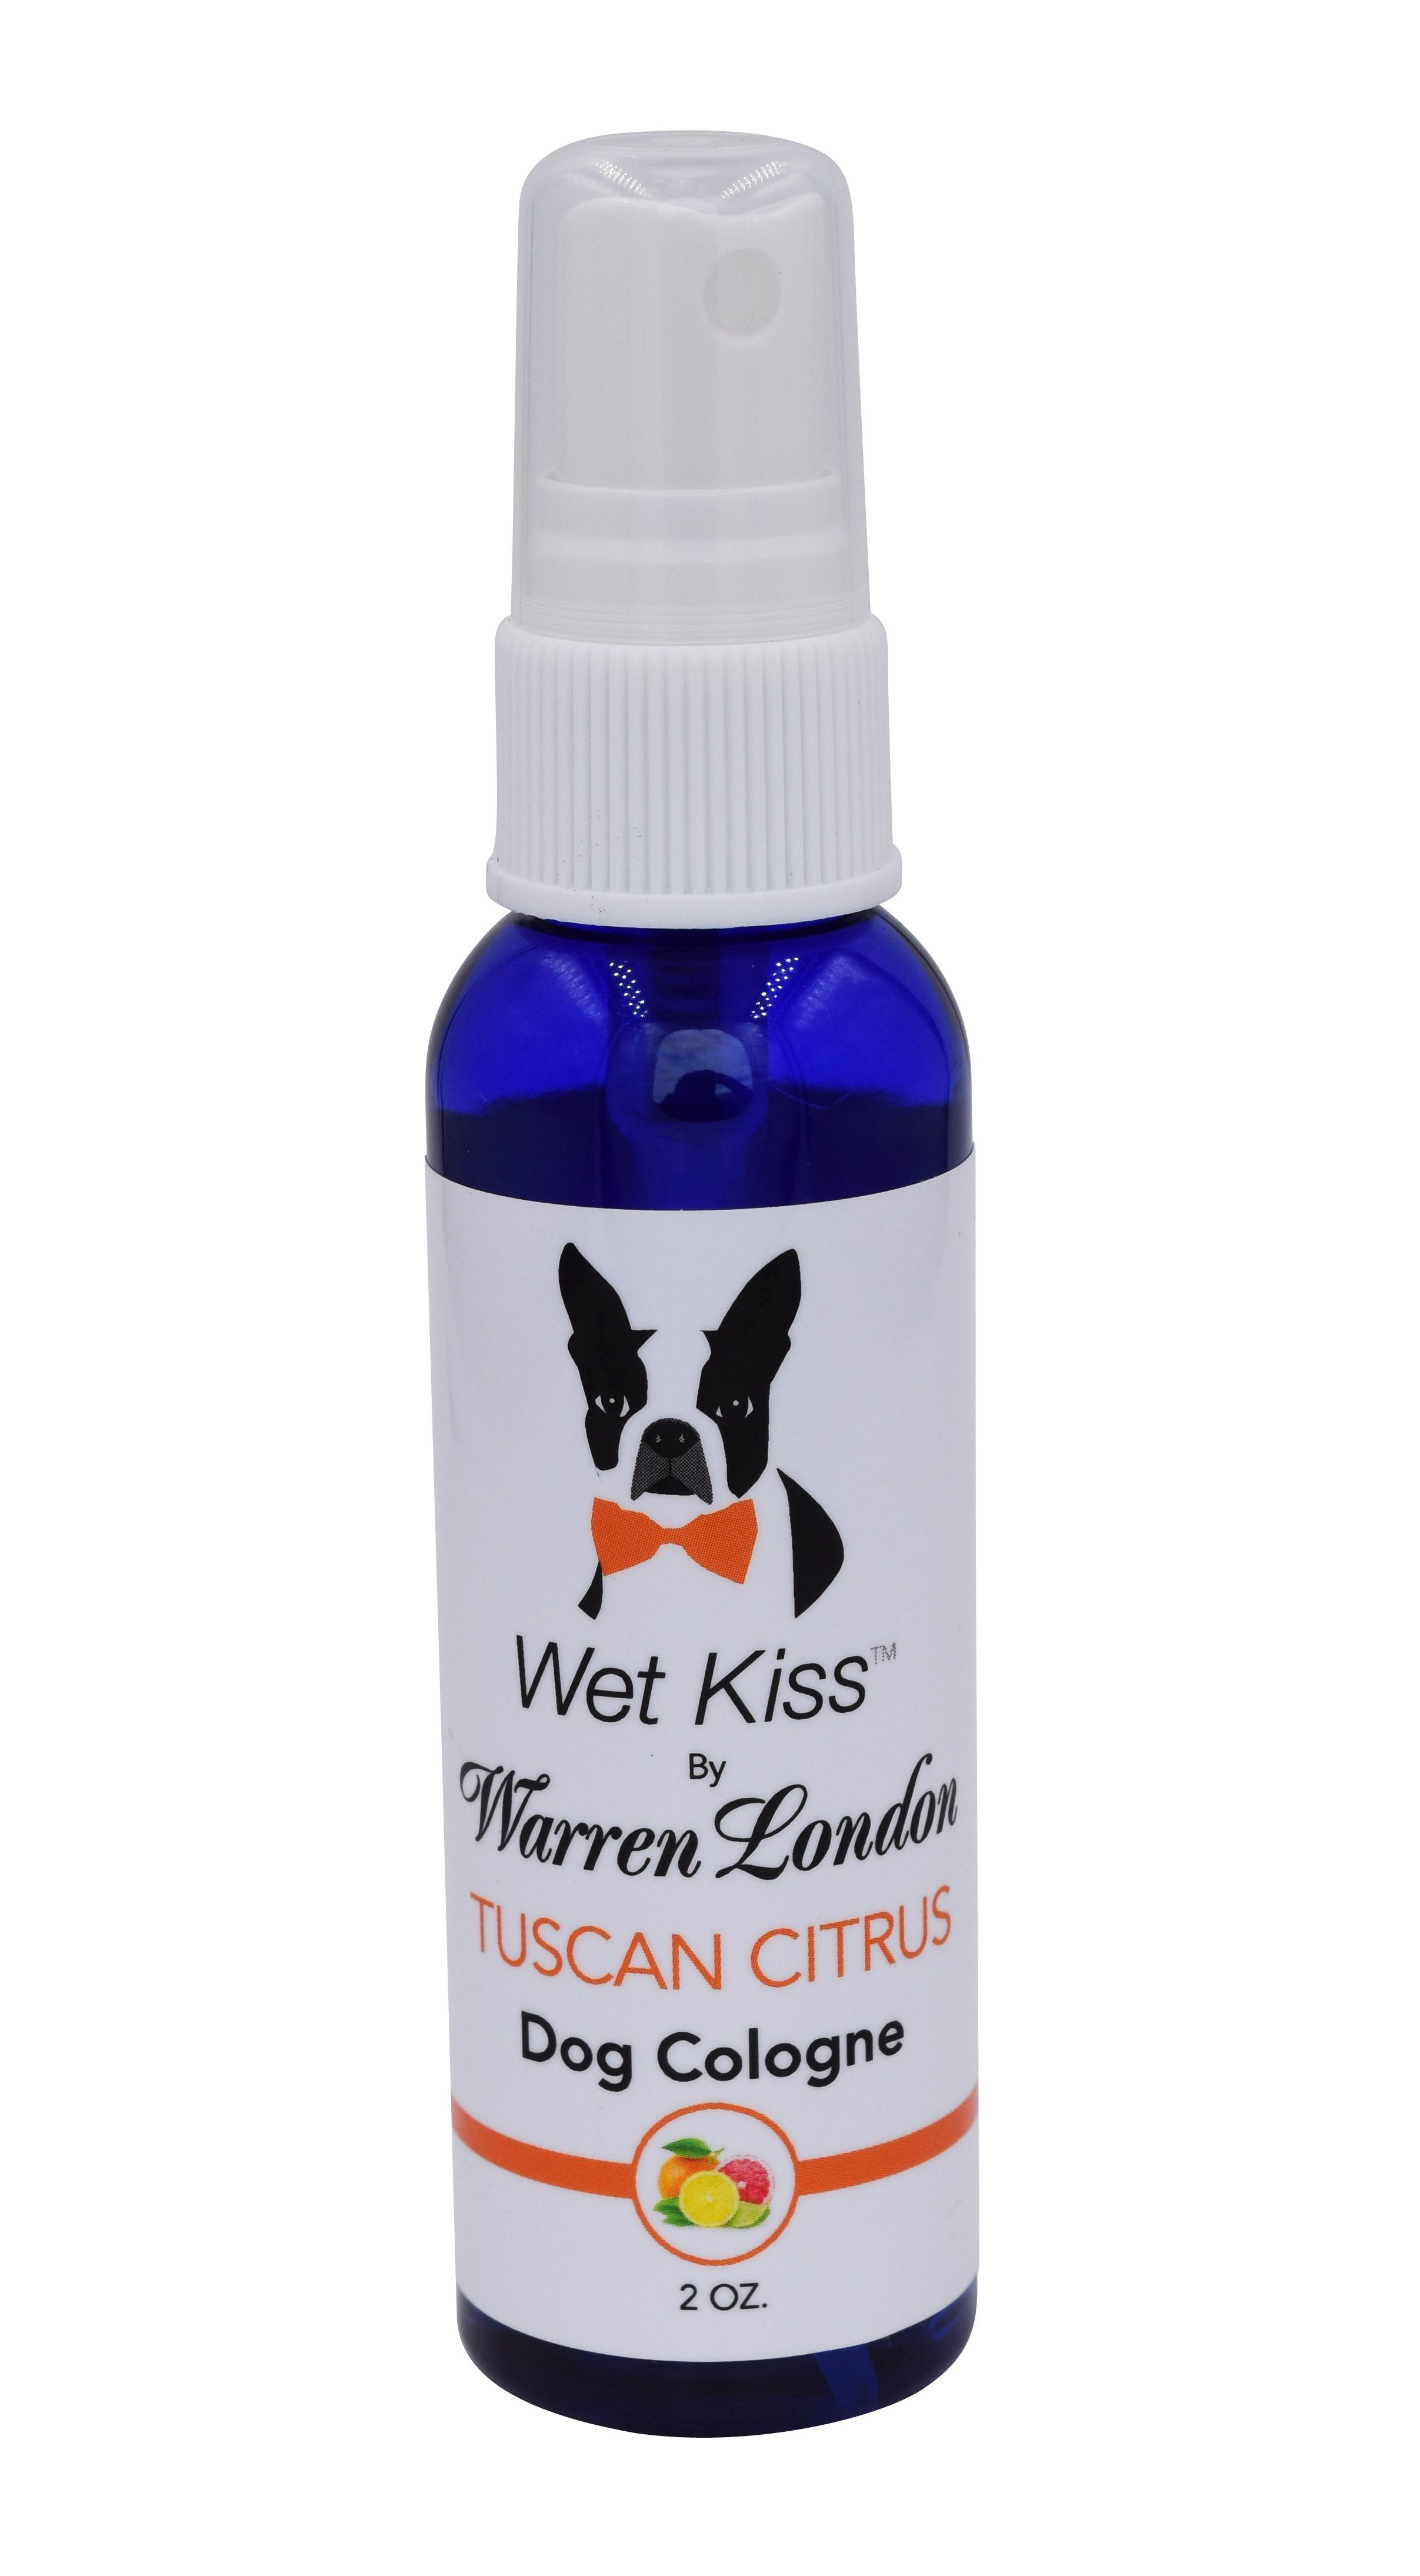 Wet Kiss Dog Cologne By Warren London - 2 Oz or 16 Oz Spa Product Warren London Tuscan Citrus 2oz 